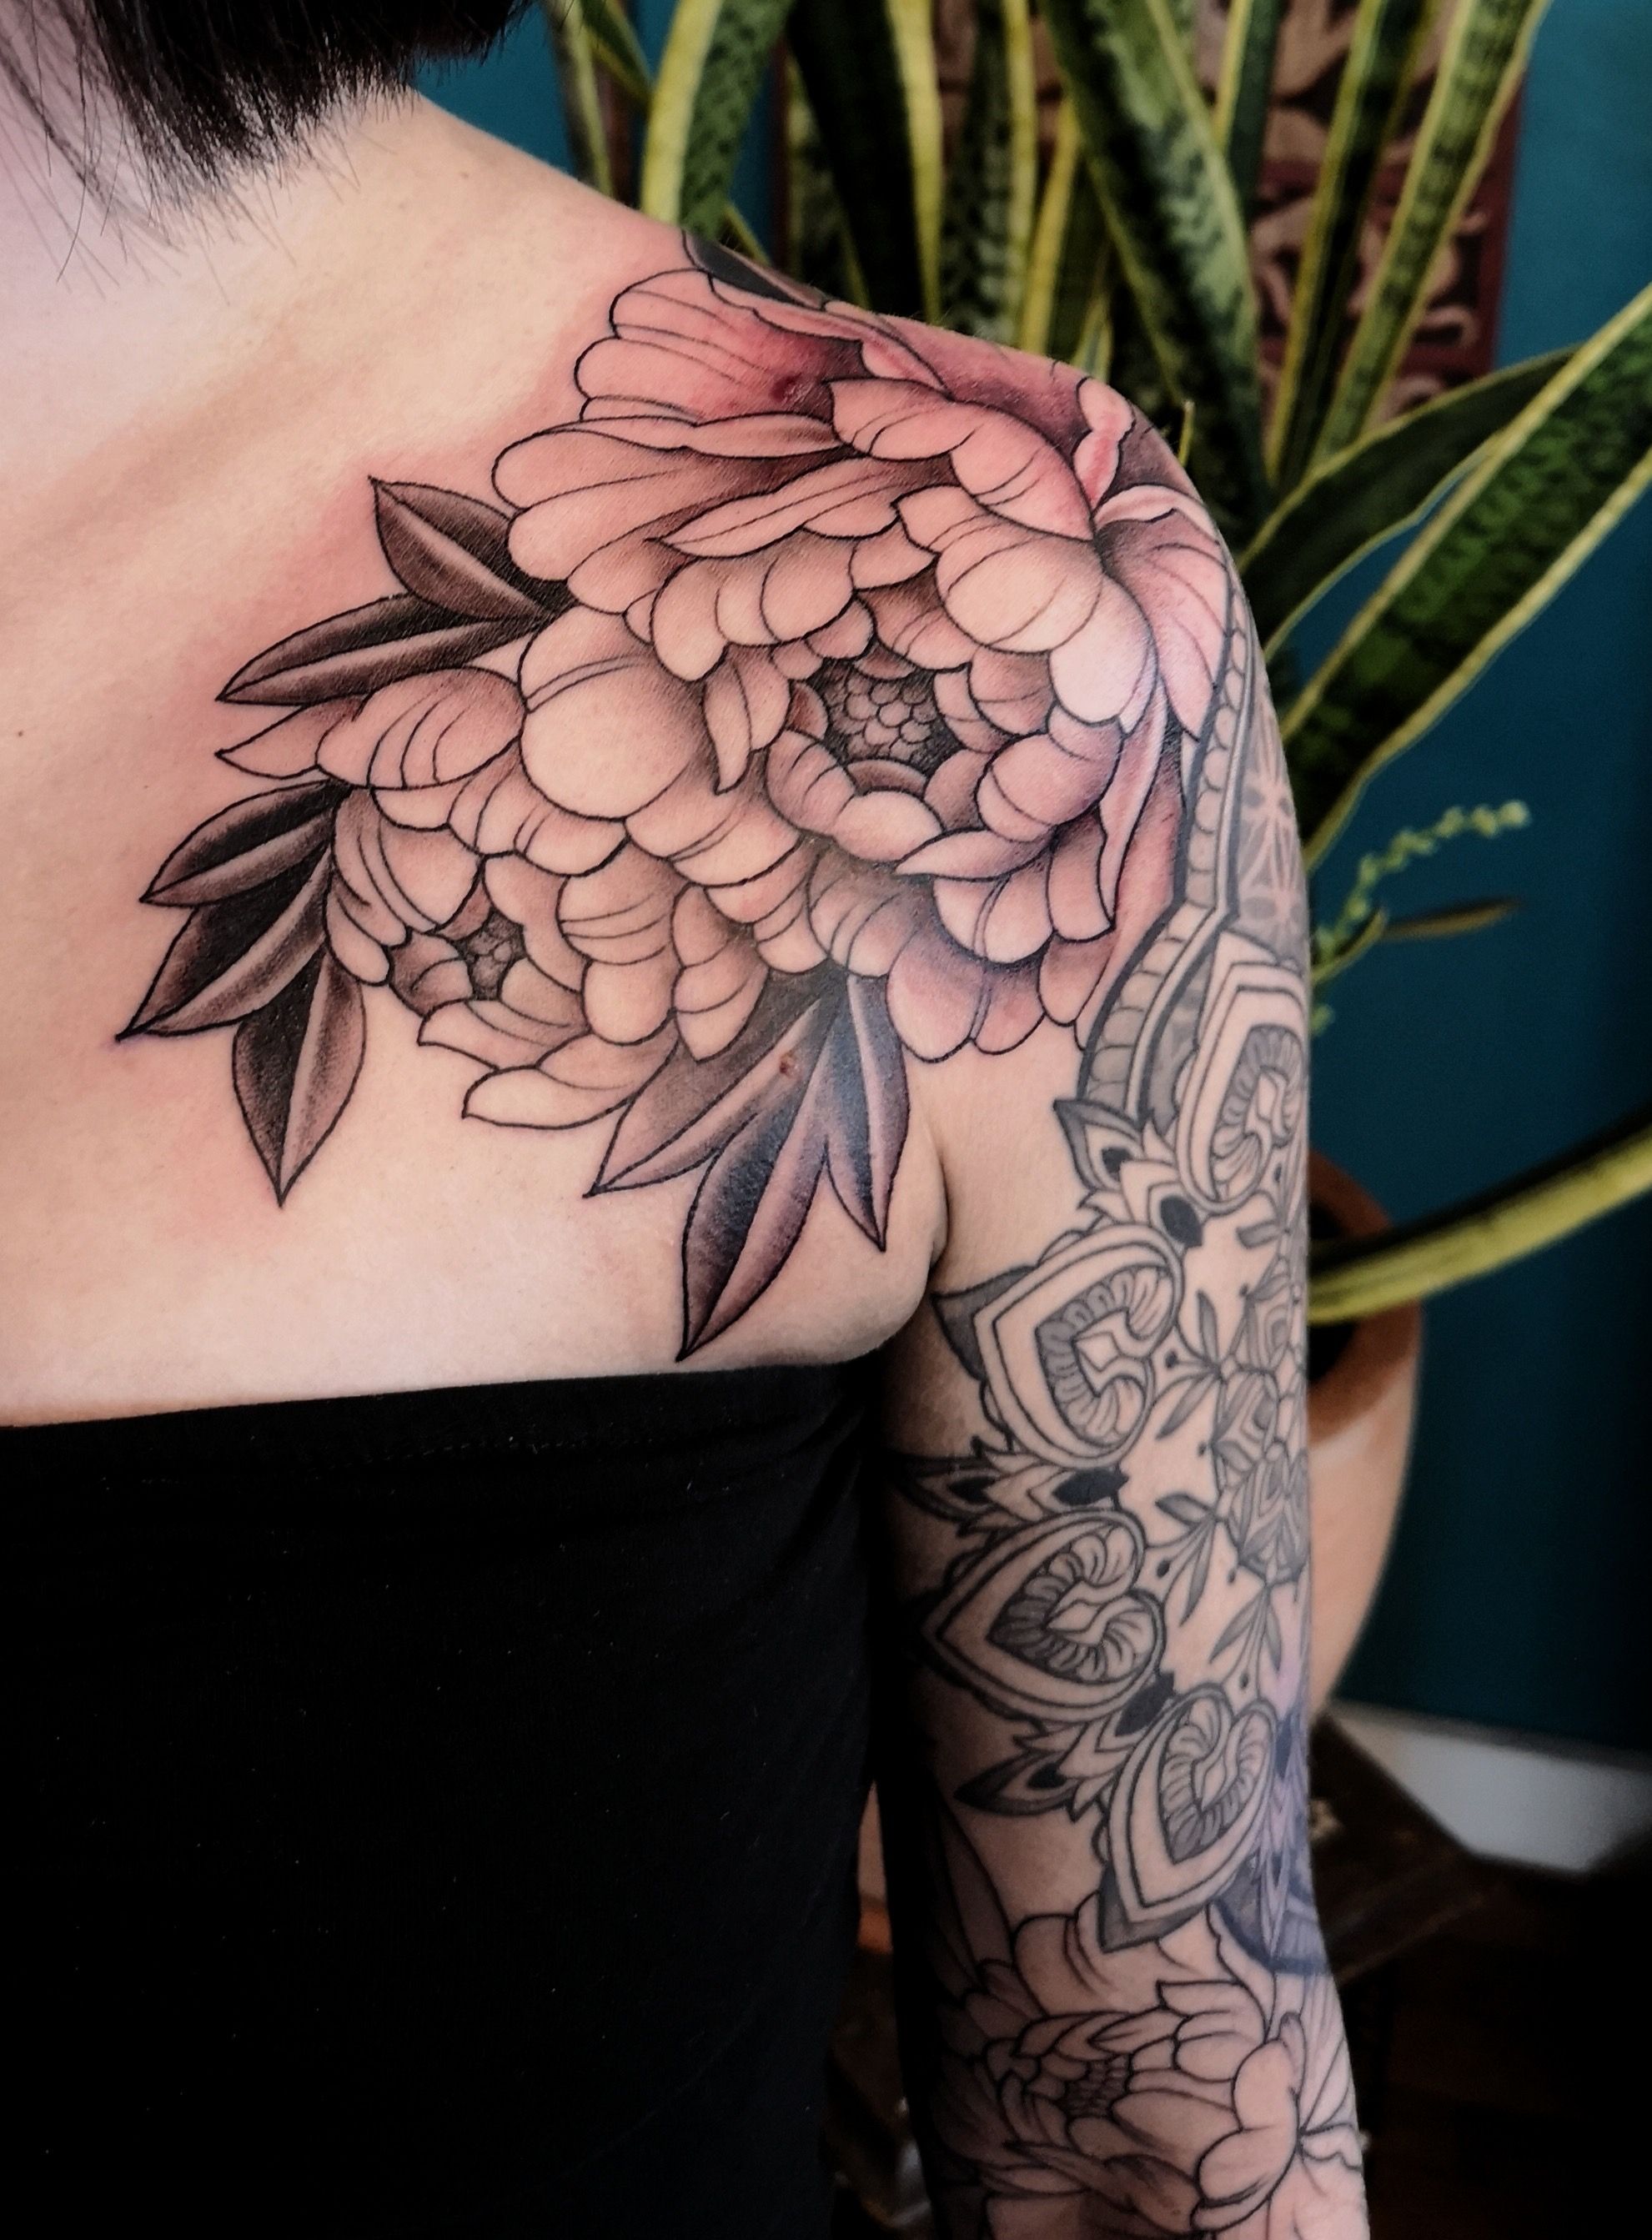 Tattoo uploaded by Wiwi Schrøder • Half sleeve with butterfly 🦋 . . . .  #finelinetattoo #finelinefloraltattoo #floral #floraltattoo  #botanicaltattoo #delicate #ink #backtattoo #sleevetattoo #butterfly •  Tattoodo